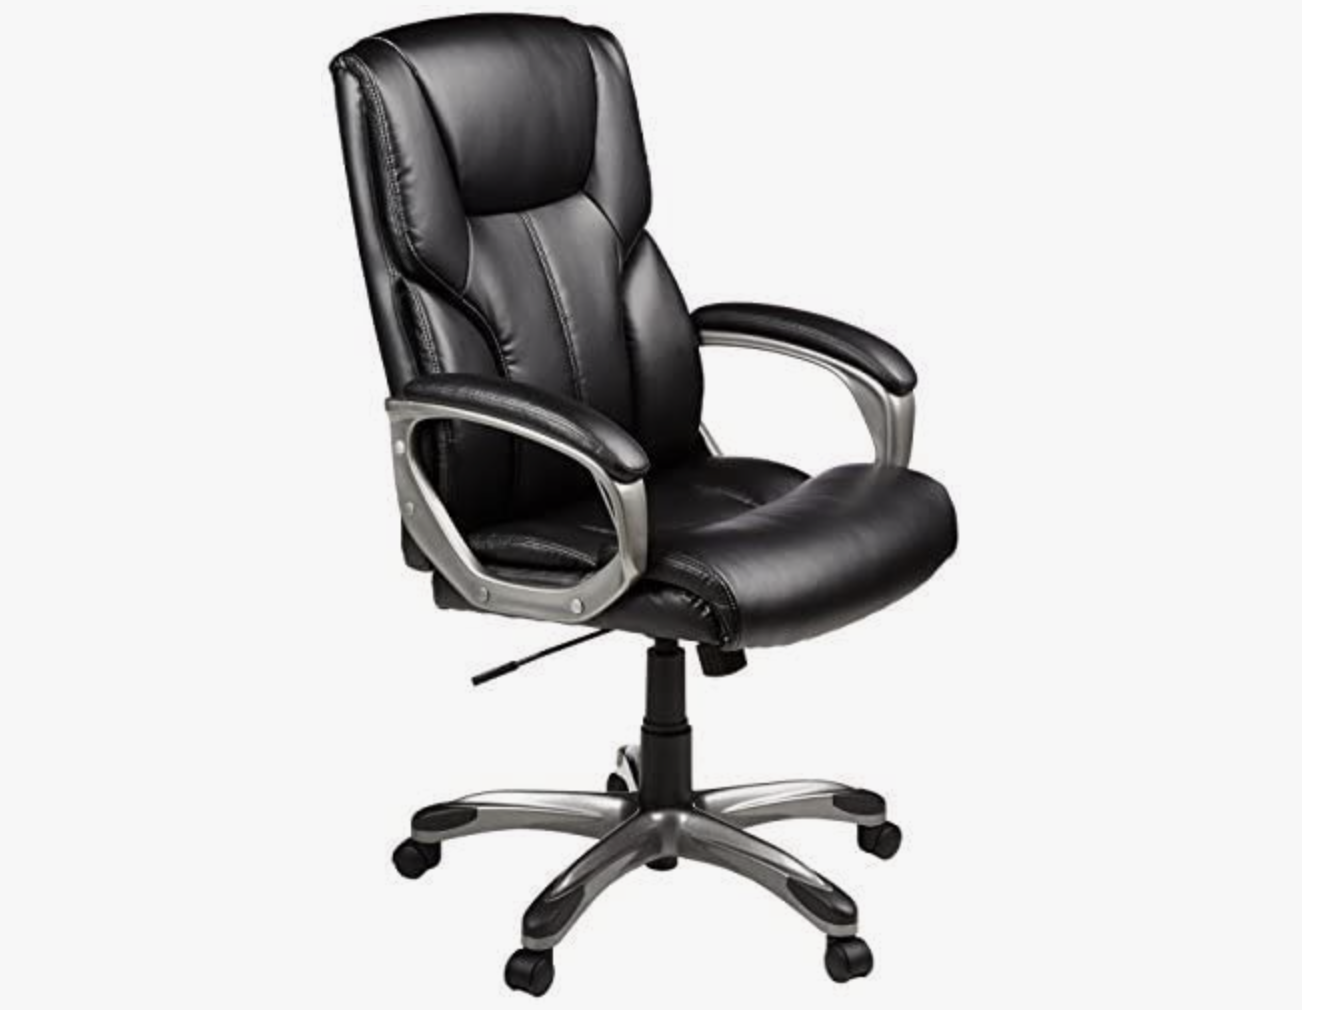 AmazonBasics High-Back Leather Swivel Executive Desk Chair